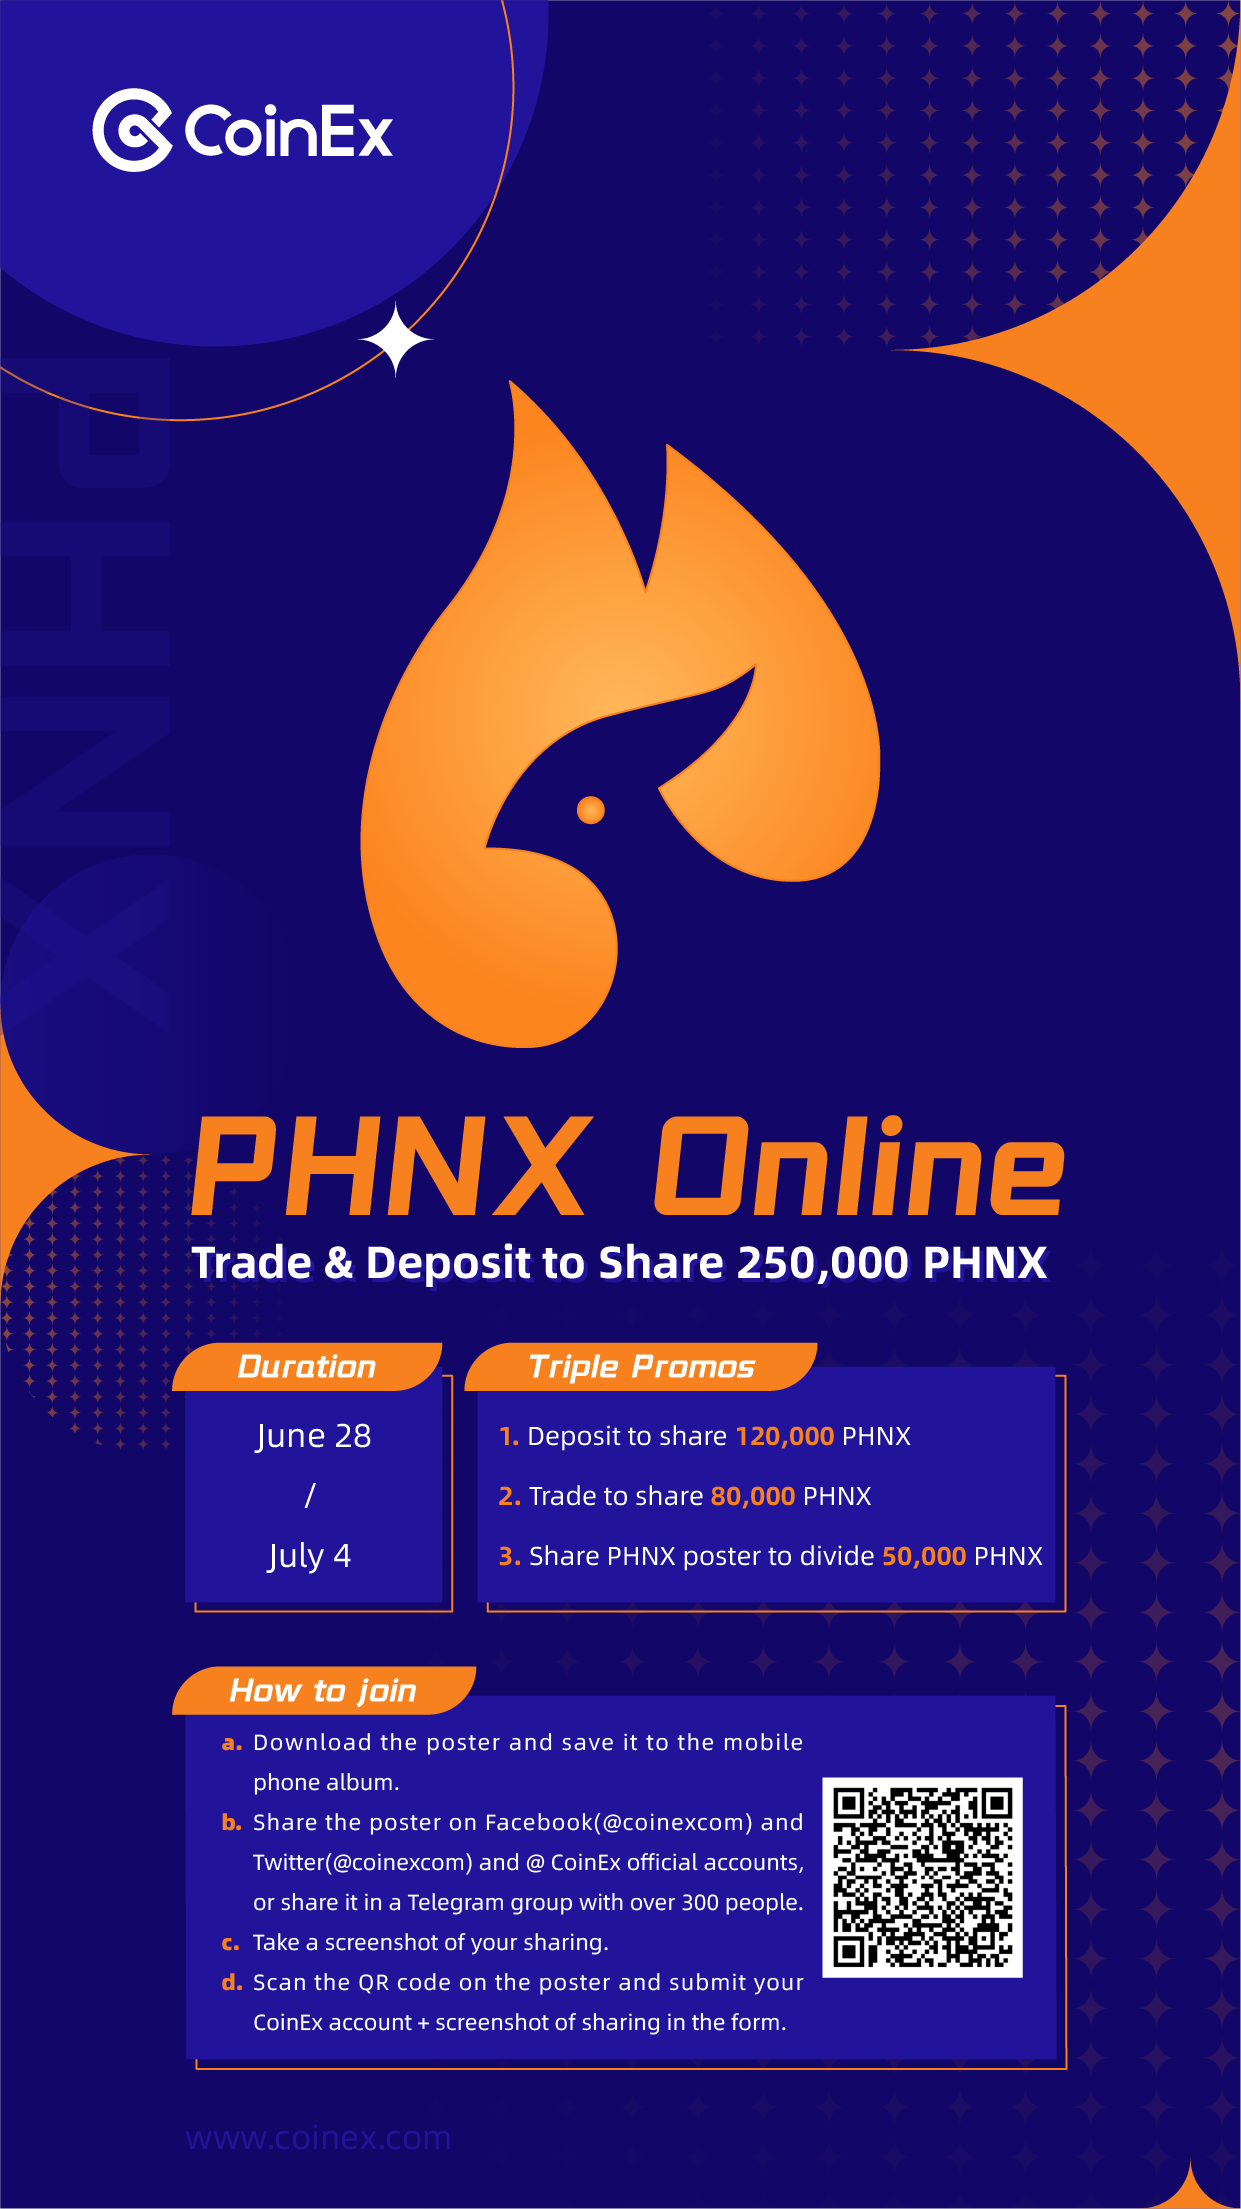 PHNX_Online_SNS-en.png